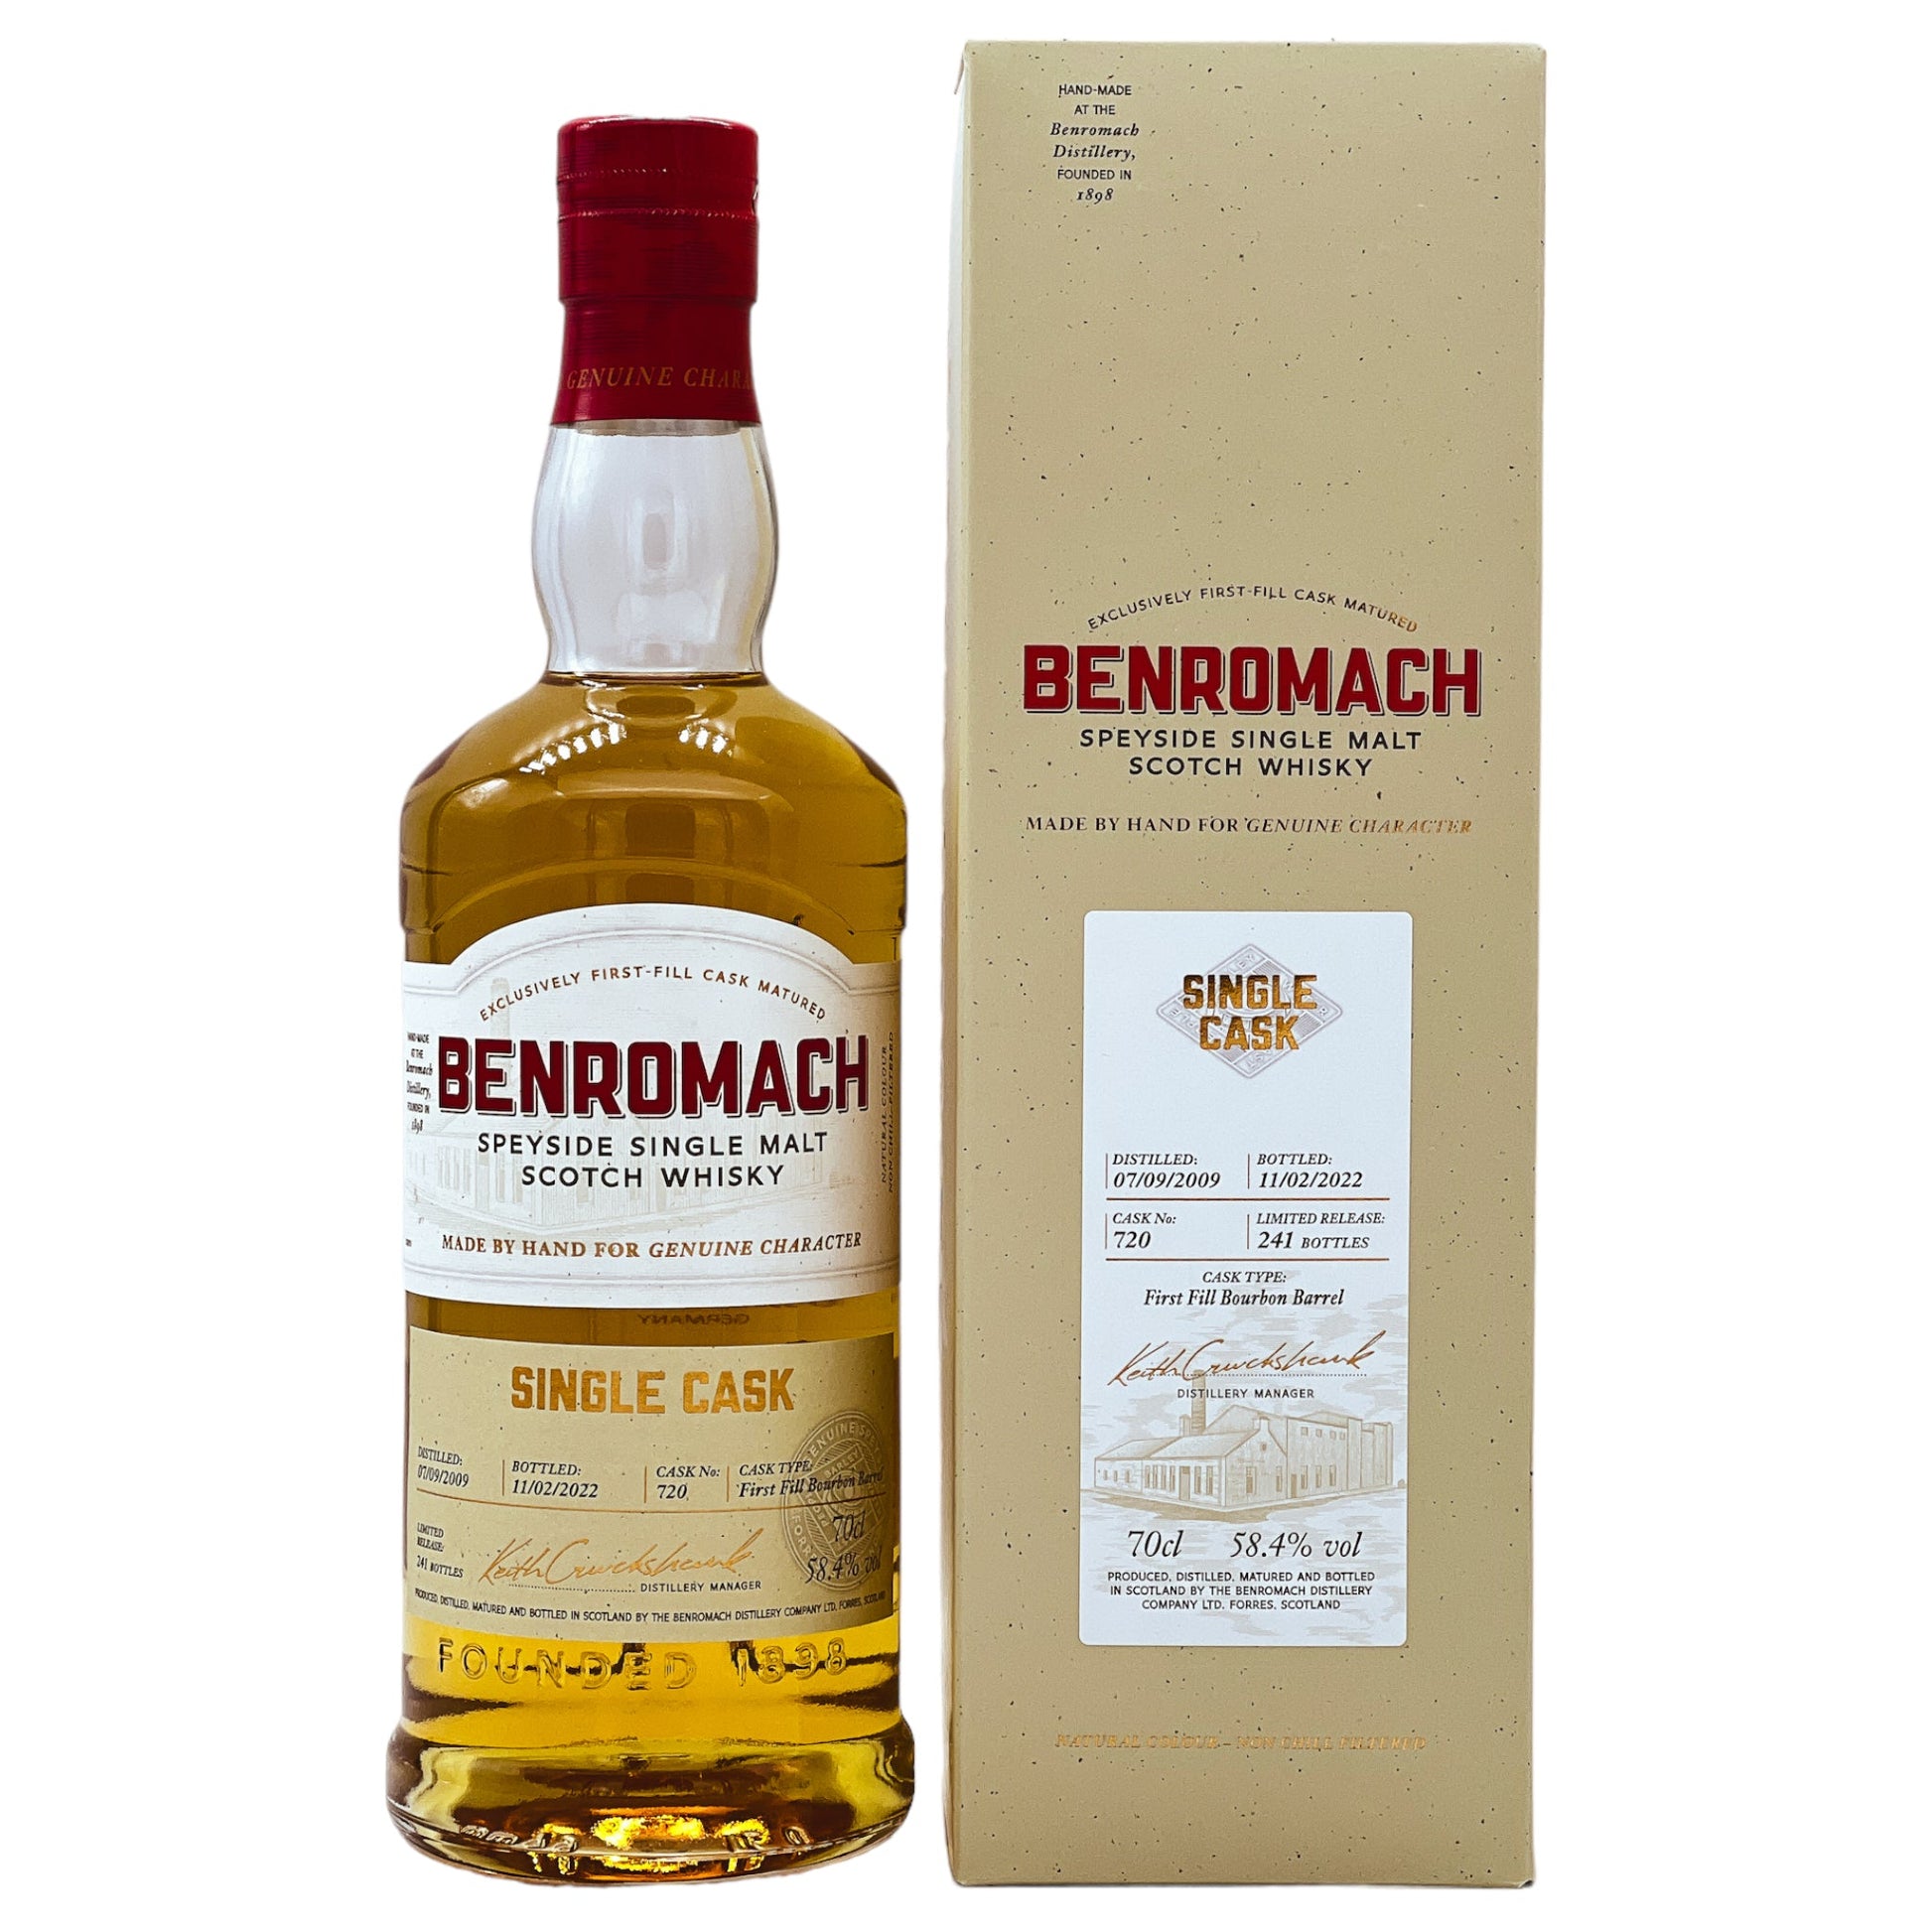 Benromach | Bourbon Barrel Single Cask #720 | 2009/2022 | 58,4%GET A BOTTLE